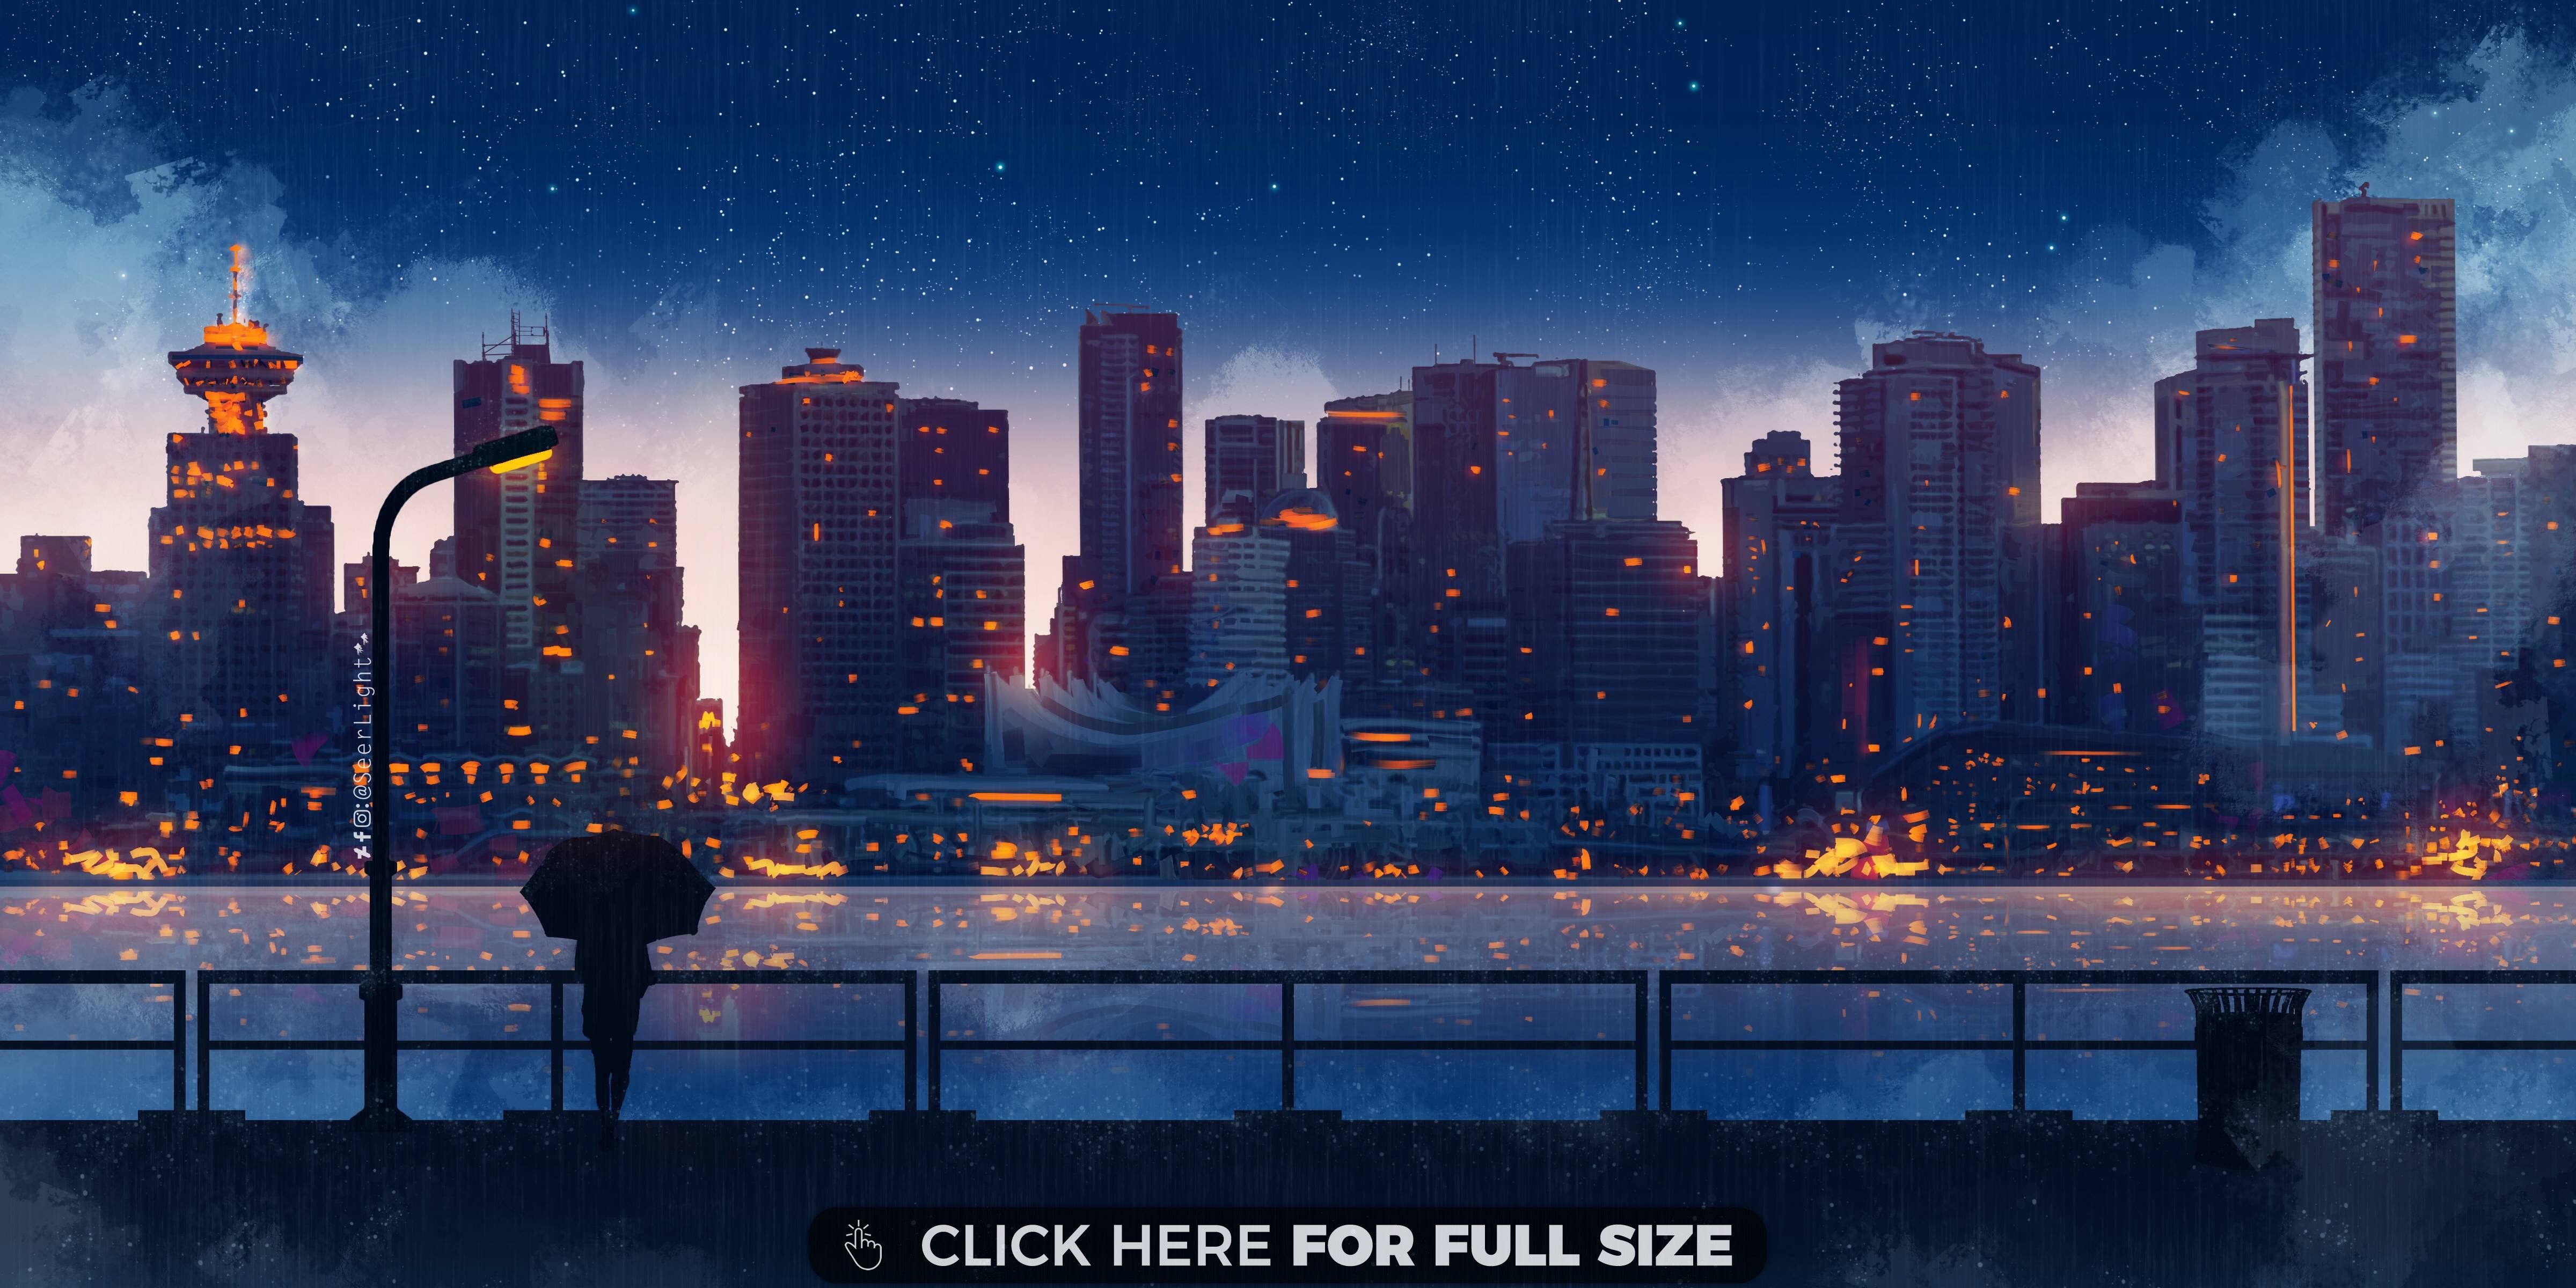 A Rainy Night 4K wallpaper. Cityscape wallpaper, City wallpaper, Anime scenery wallpaper